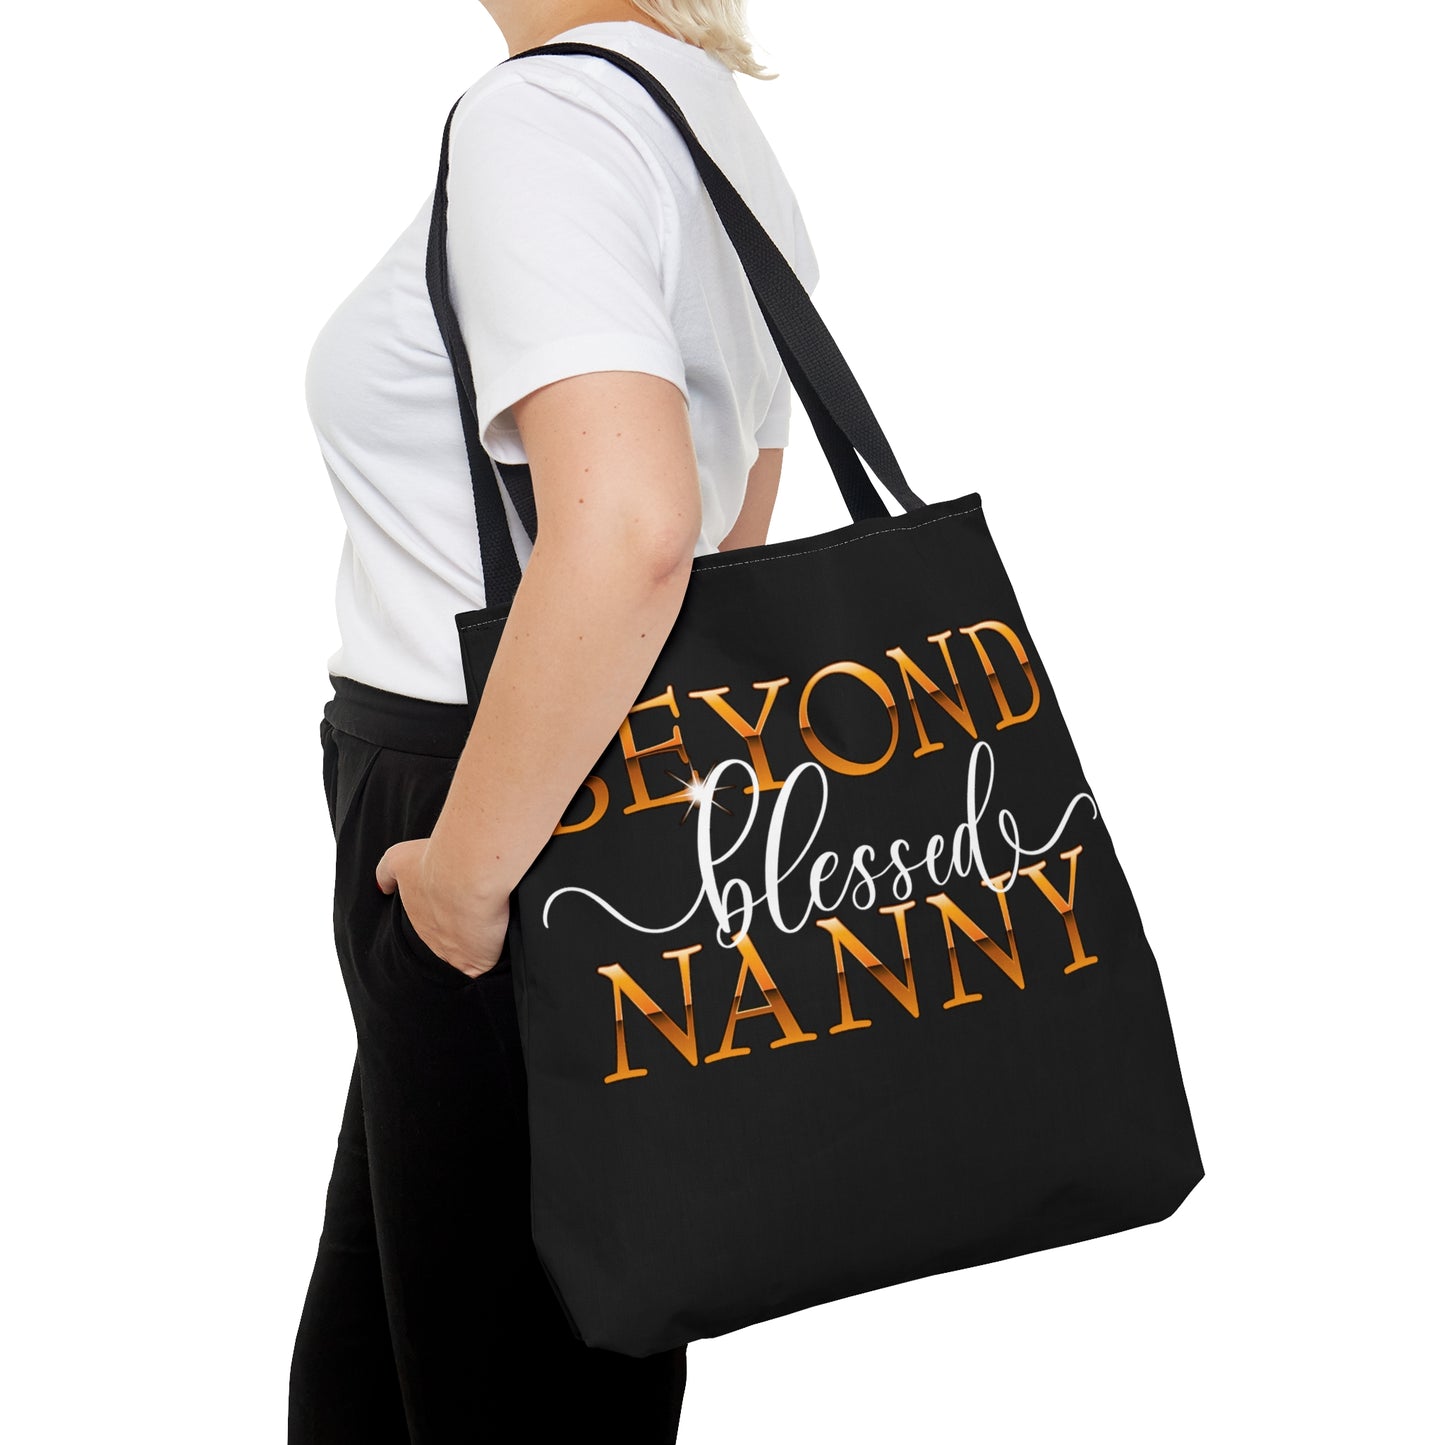 Beyond Blessed Nanny - White - Tote Bag (AOP)